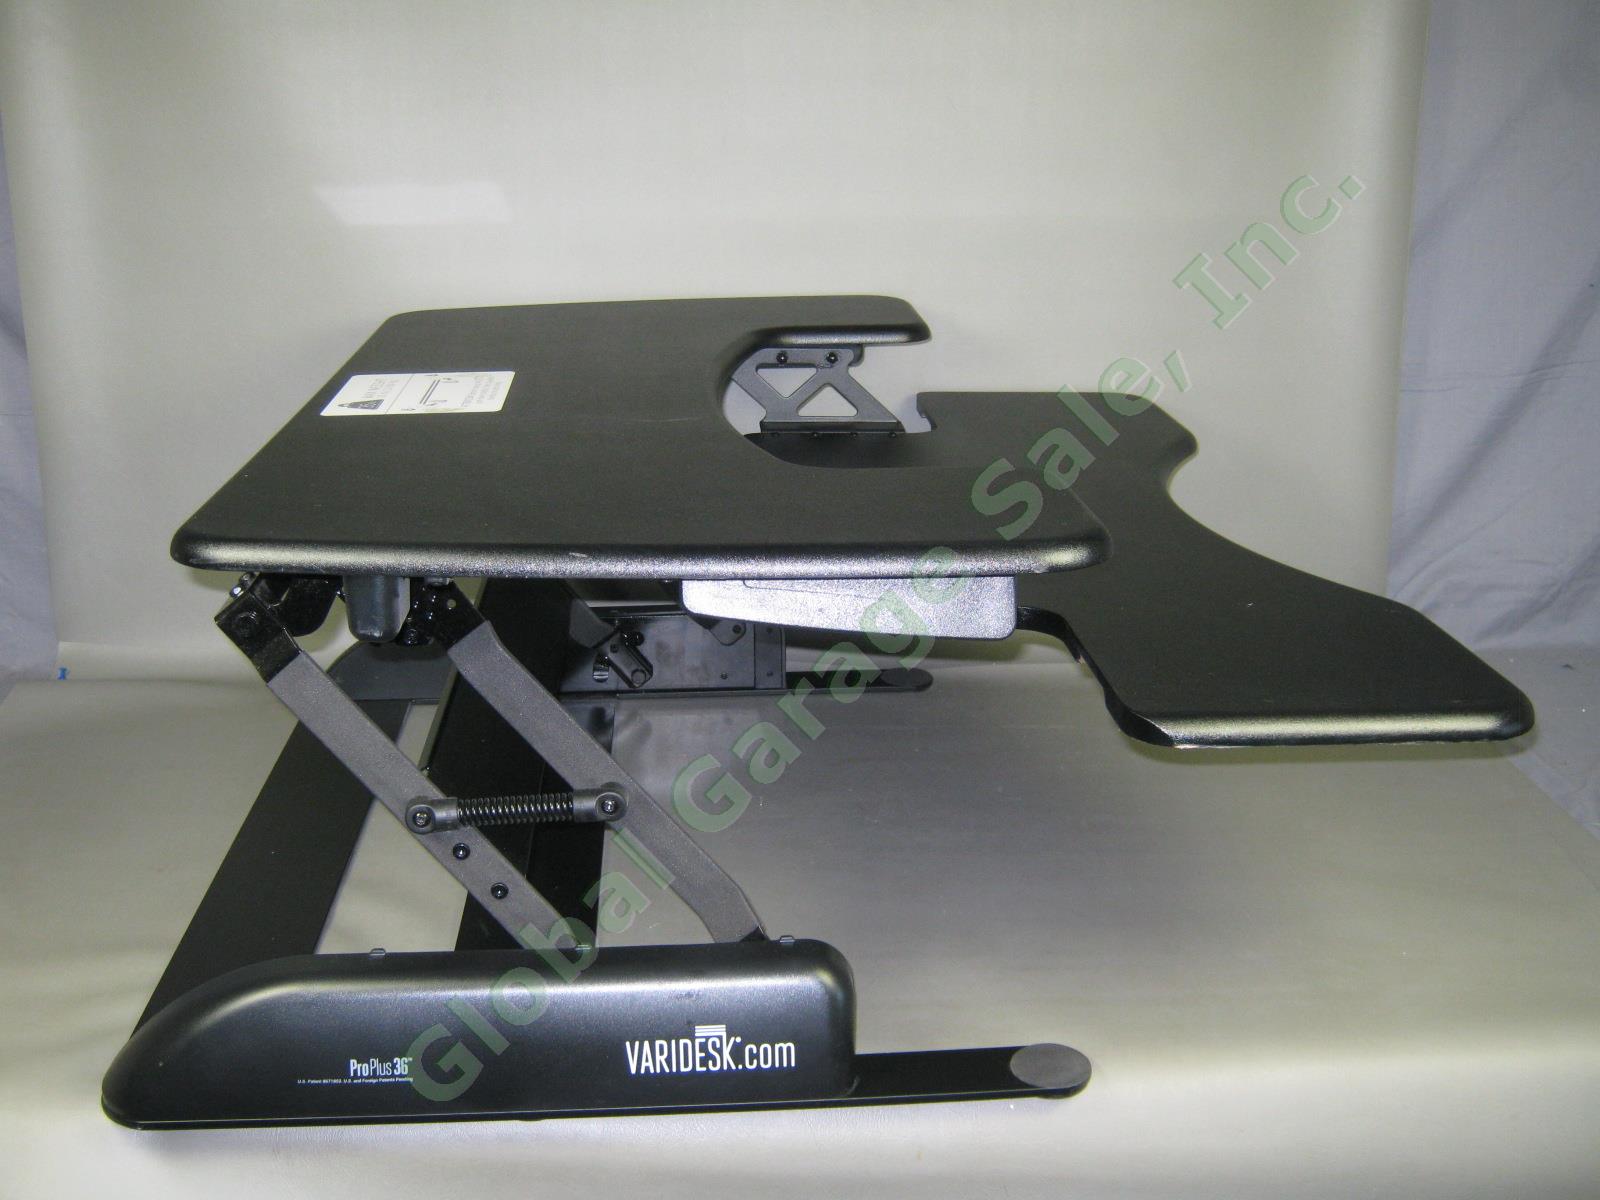 Varidesk Pro Plus 36 Height Adjustable Sit Stand-Up Standing Computer Desk 49900 3